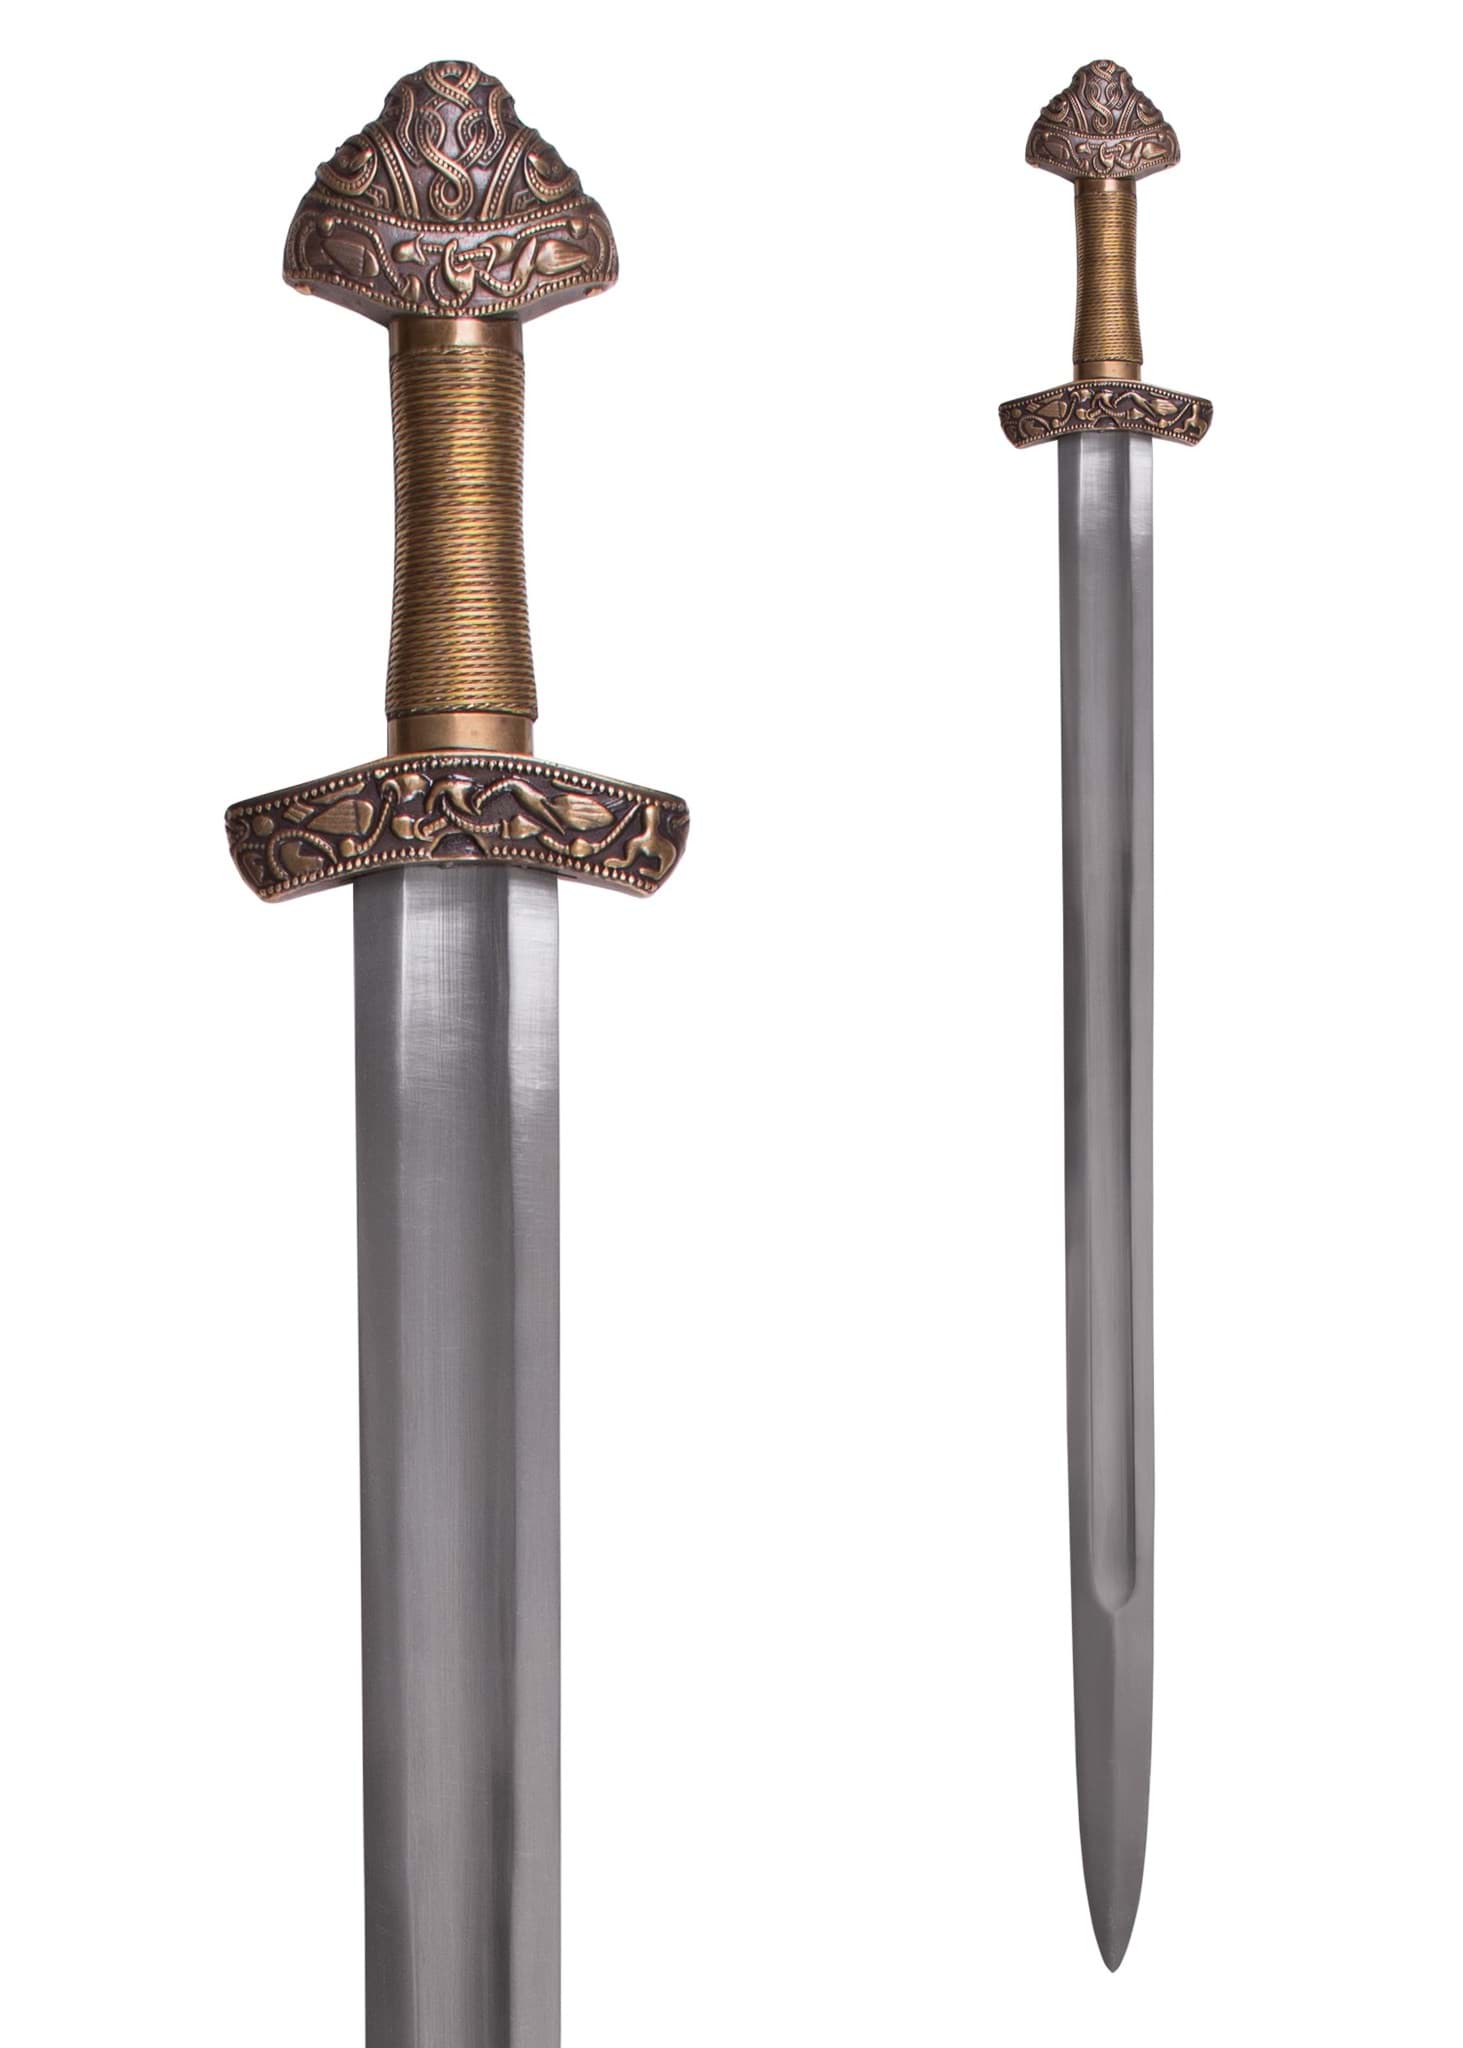 Picture of Battle Merchant - Viking Sword from Dybäck